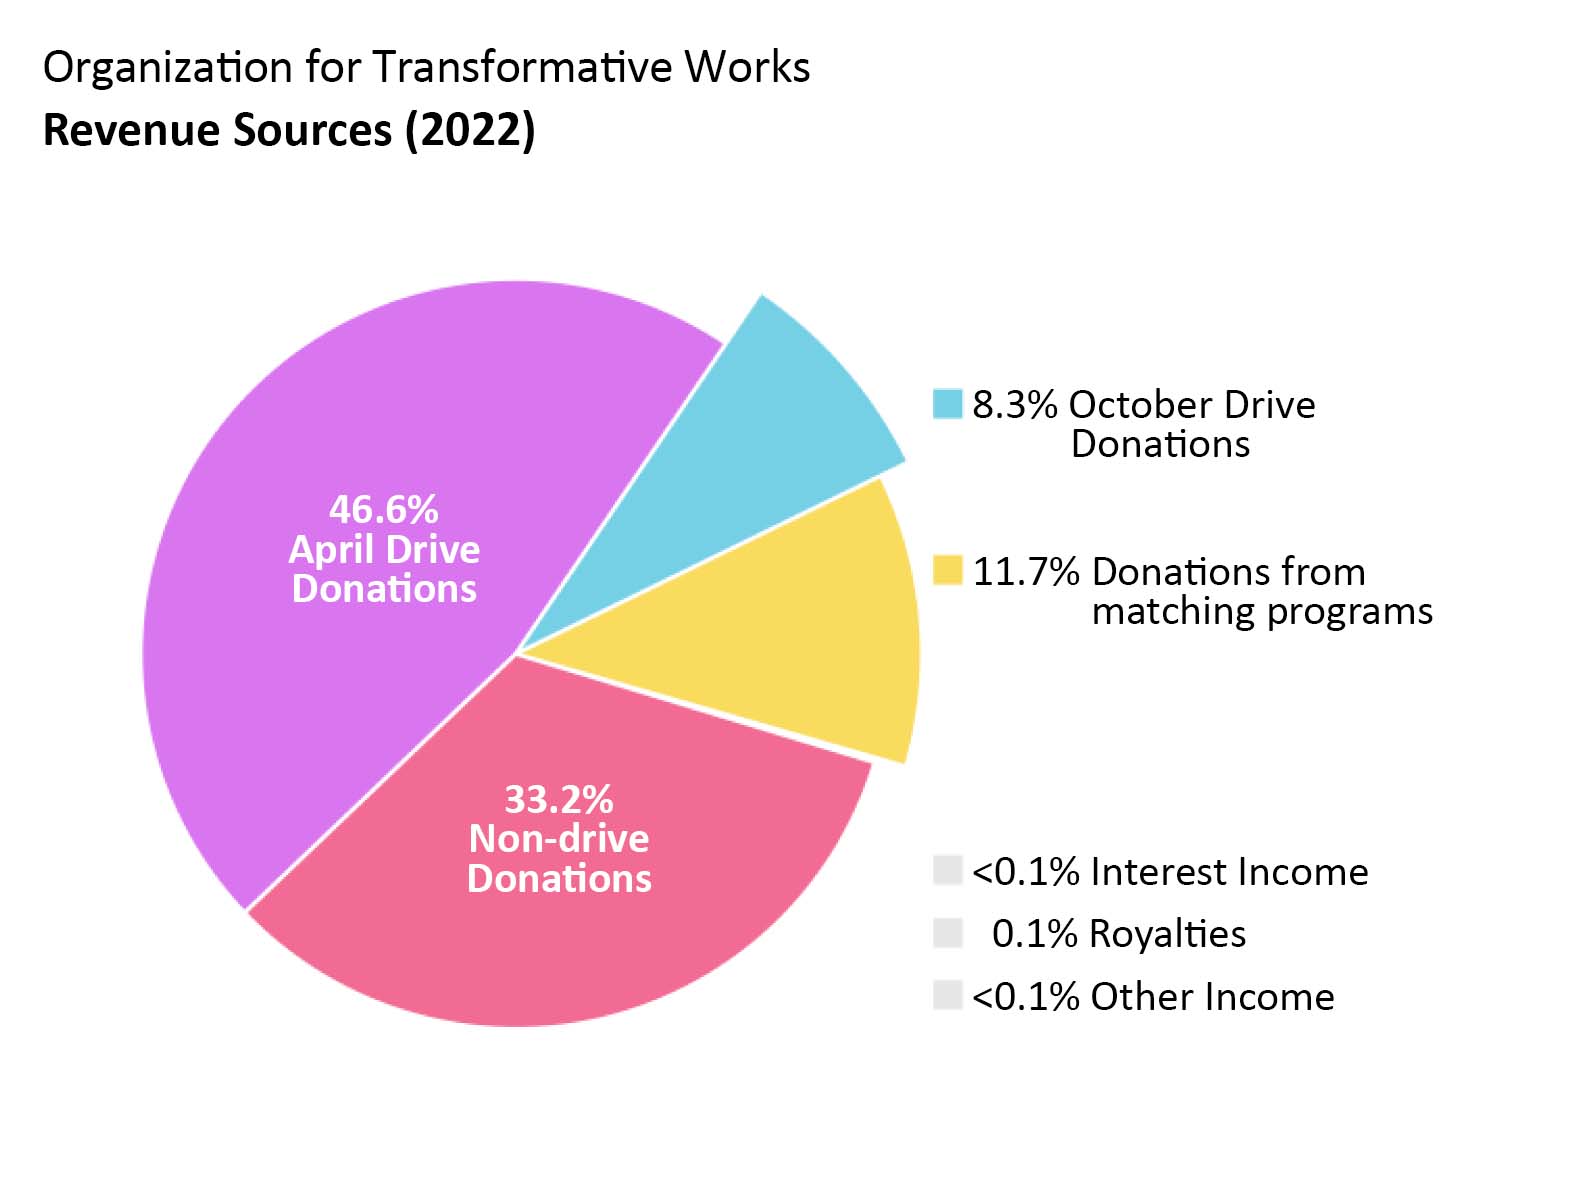 OTW revenue: April drive donations: 46.6%. October drive donations: 8.3%. Non-drive donations: 33.2%. Donations from matching programs: 11.7%. Interest income: 0.1%. Royalties: 0.1%. Other Income: 0.1%